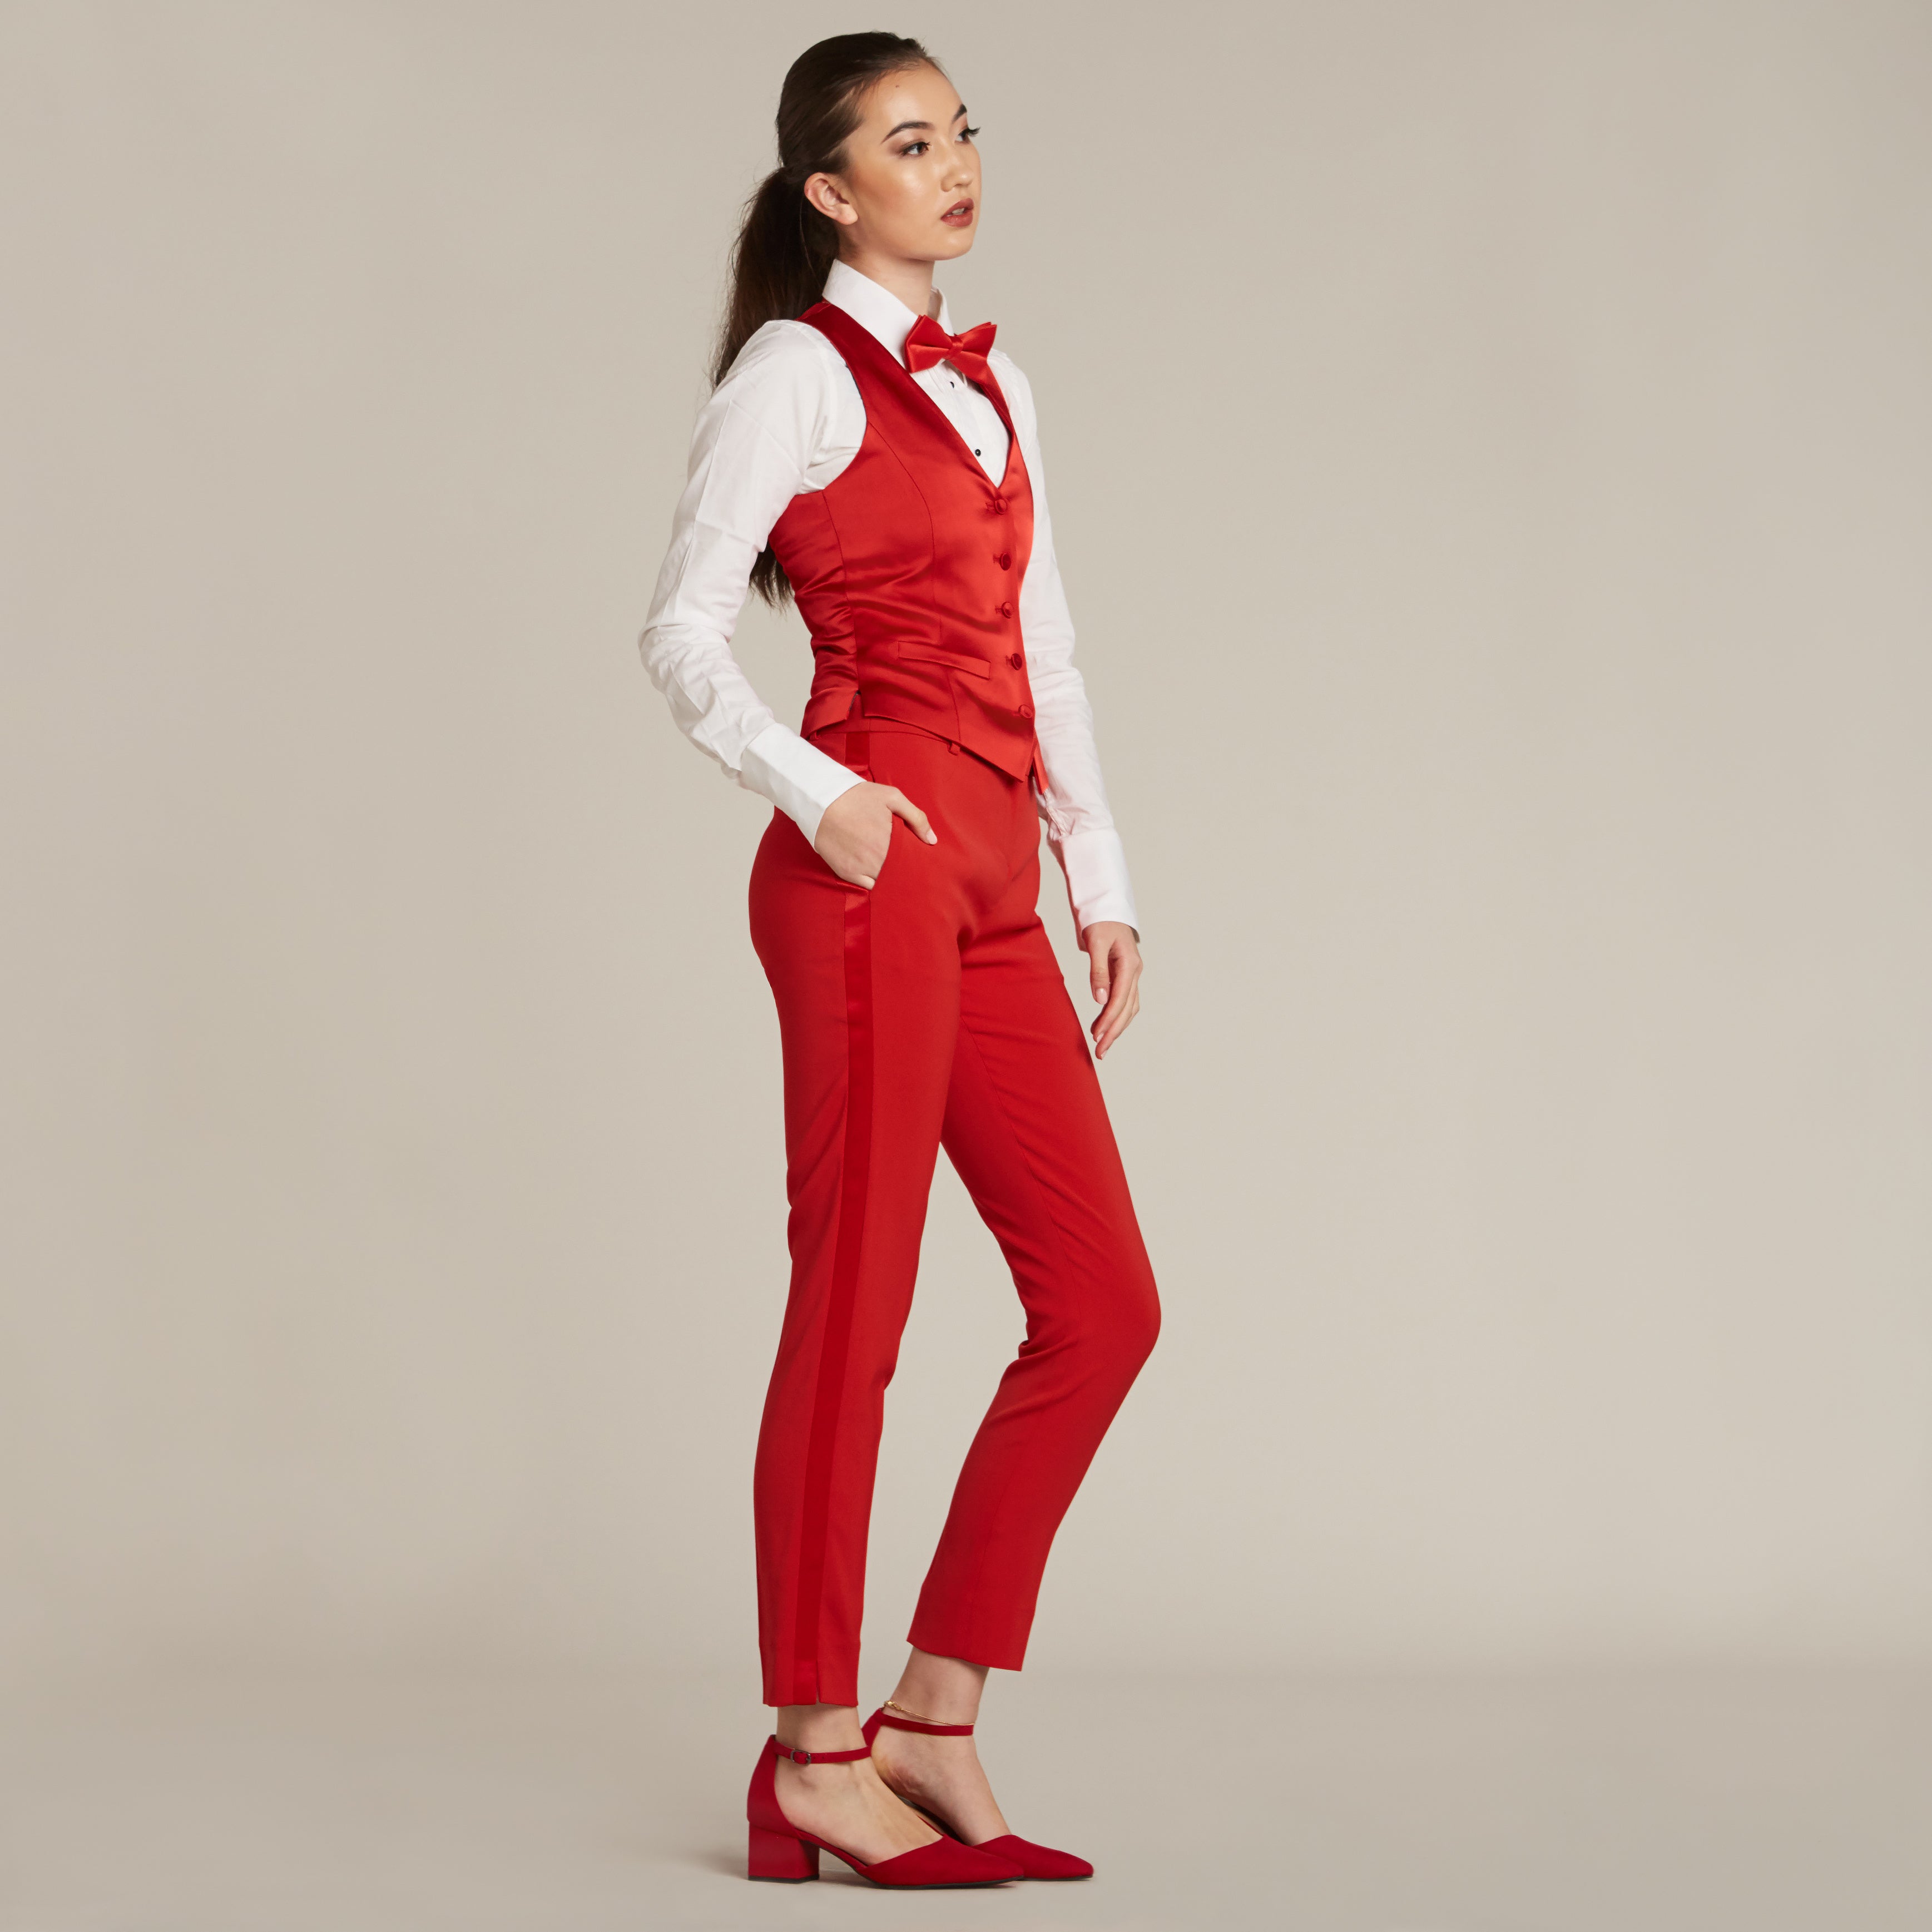 Red Tuxedo Vest - Women’s Tuxedo Suits | girls prom tuxedo | gal tux | Wedding Party, Bridesmaids